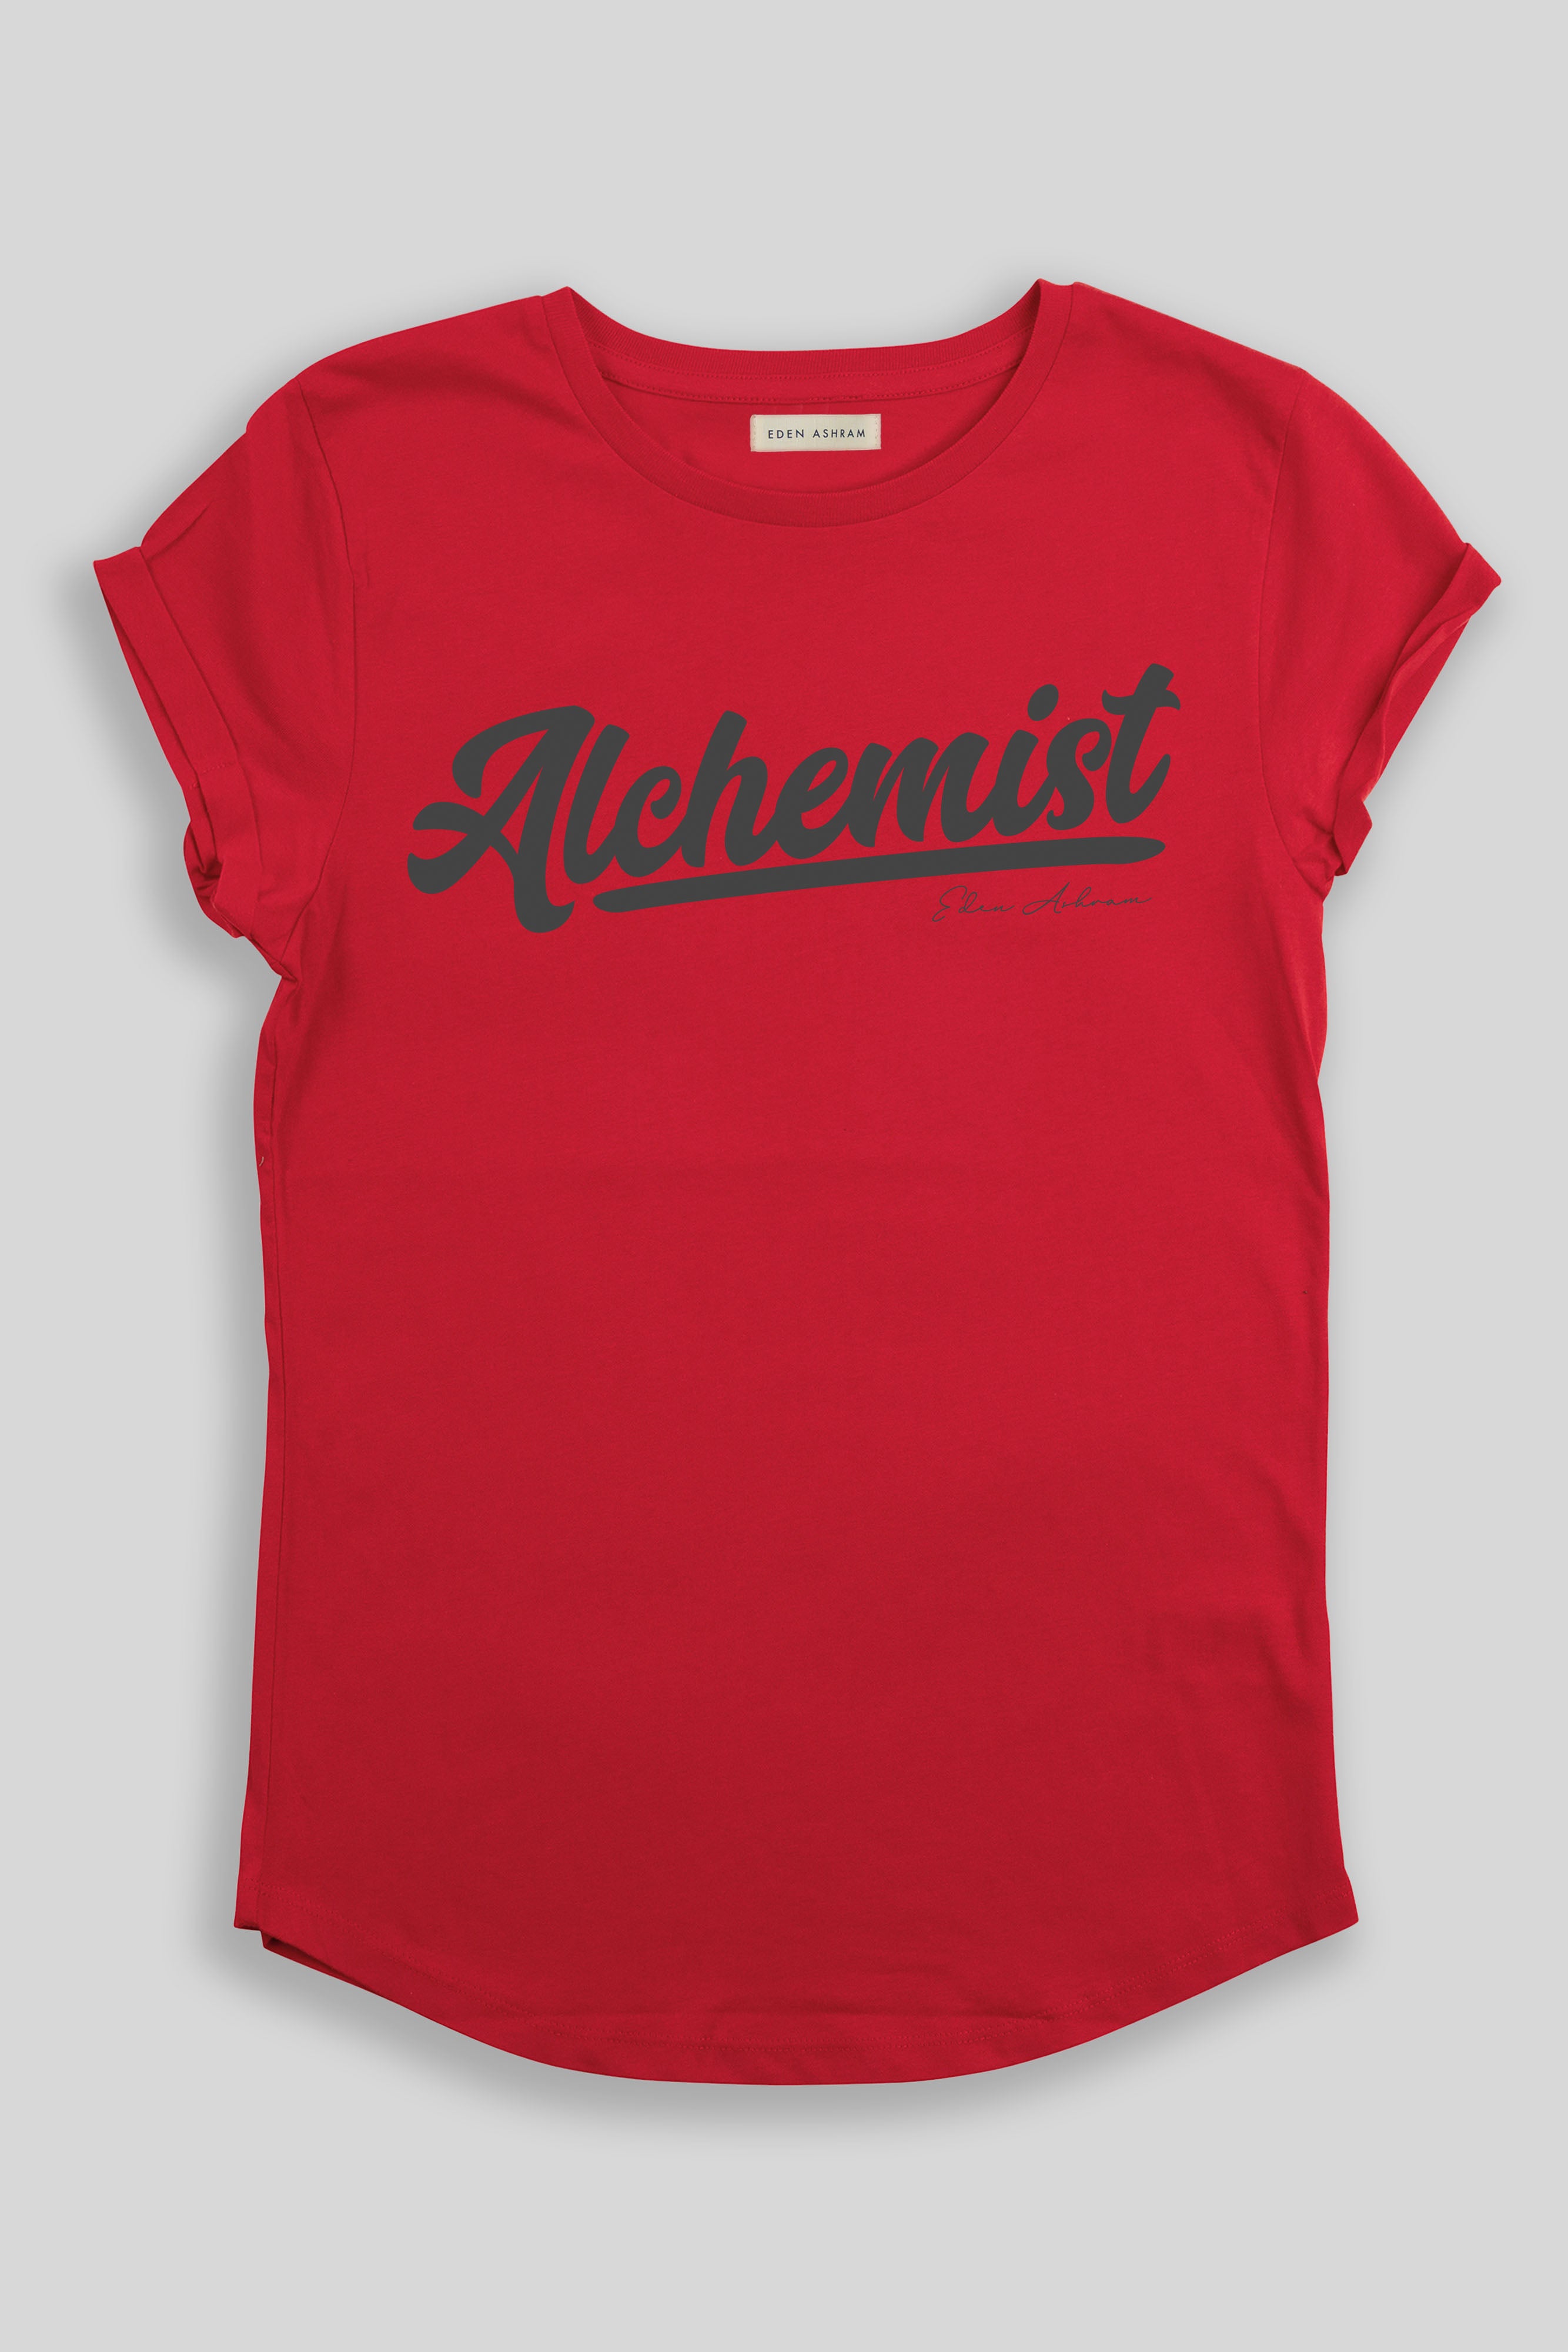 EDEN ASHRAM Alchemist Organic Rolled Sleeve T-Shirt Red